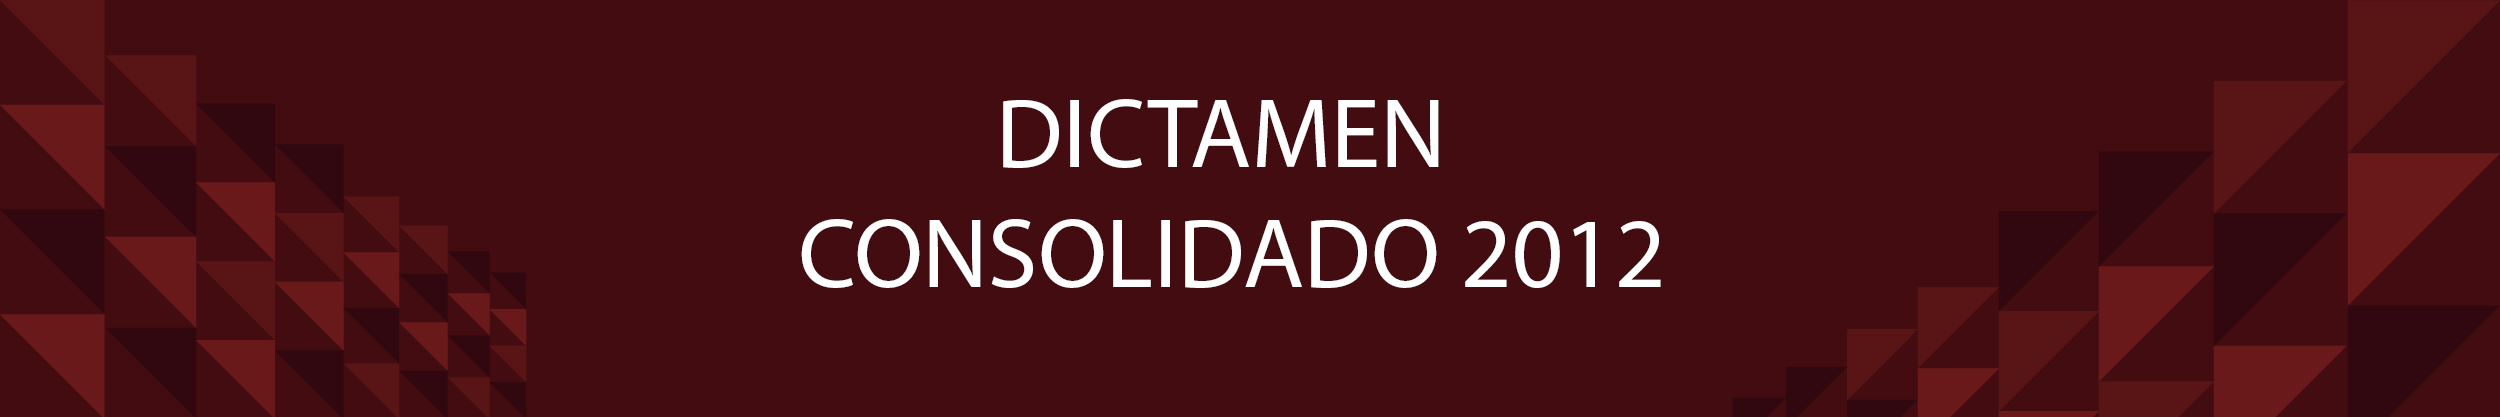 dictamenConsolidado2012